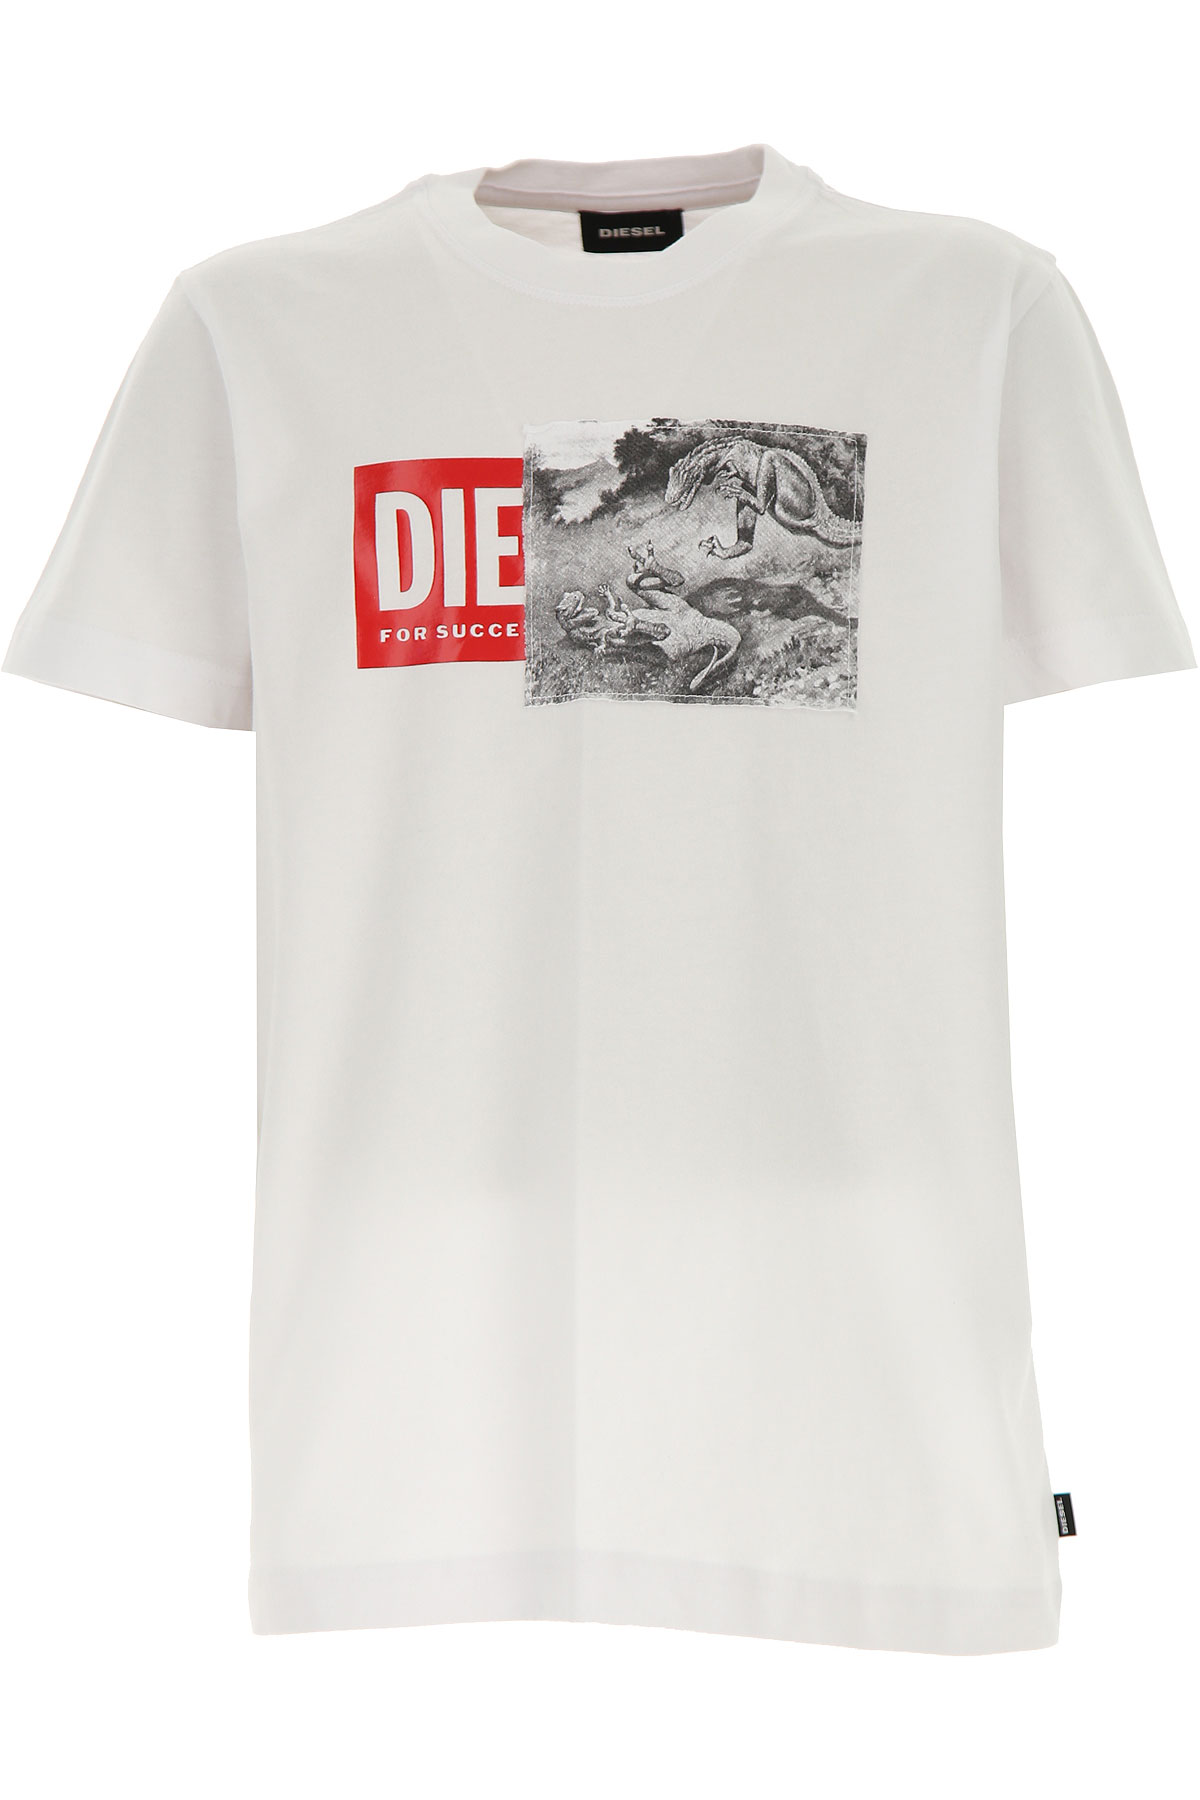 Diesel Kinder T-Shirt für Jungen Günstig im Sale, Weiss, Baumwolle, 2017, 10Y 12Y 14Y 16Y 4Y 6Y 8Y